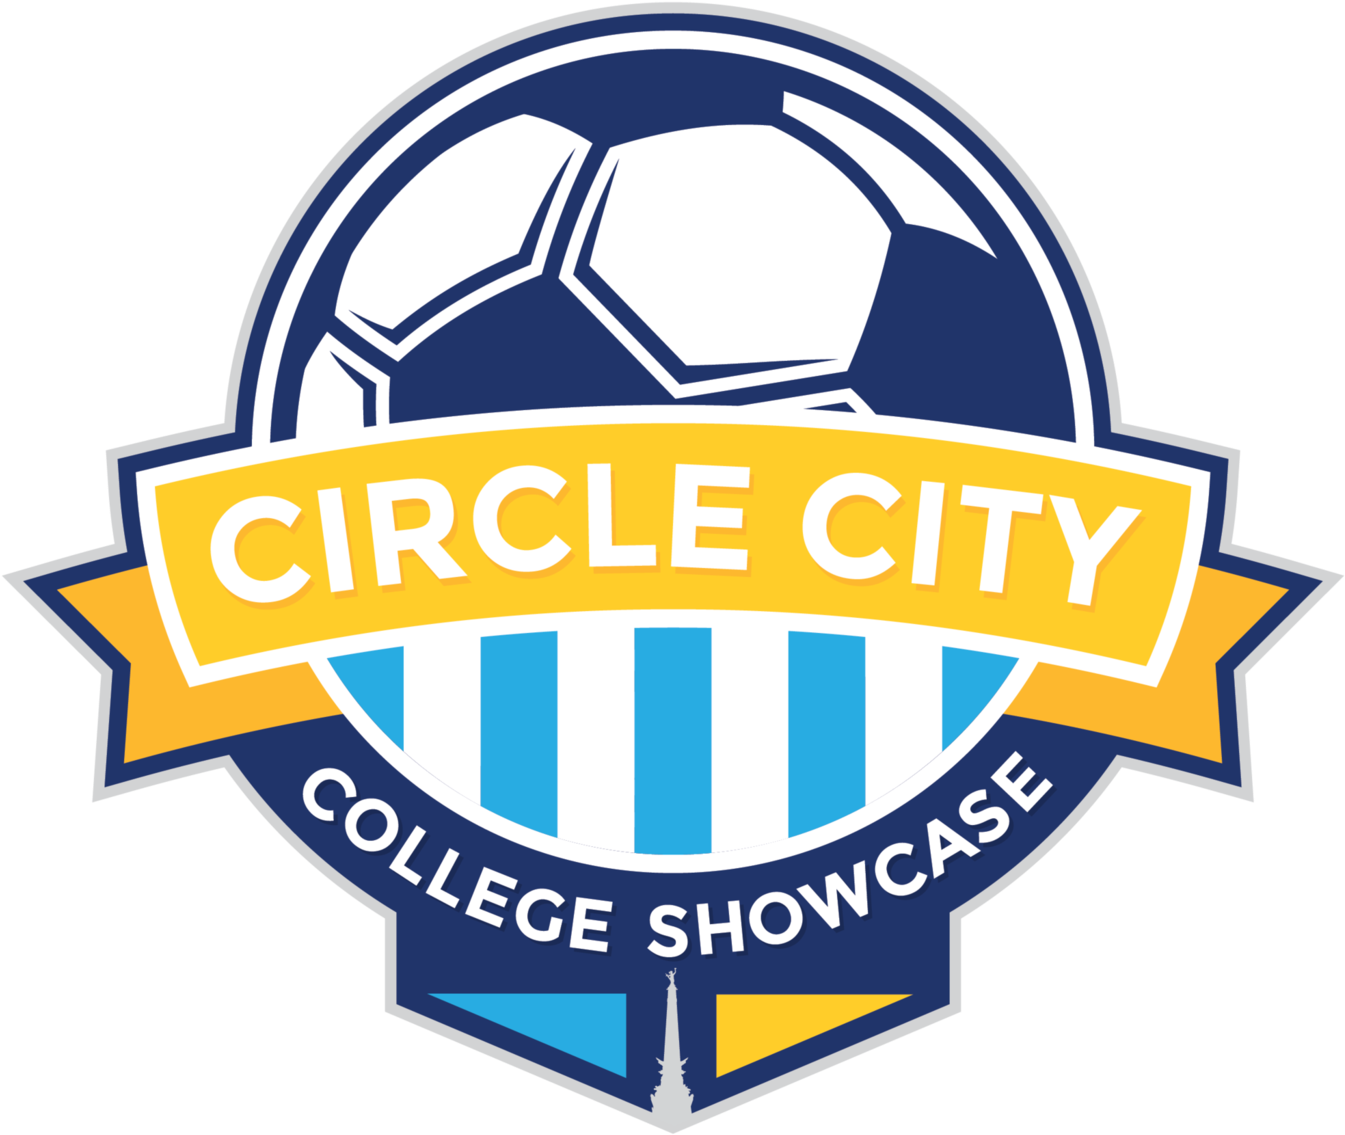 2018 Circle City College Showcase - Sample Of Football Club Logos (1400x1400)